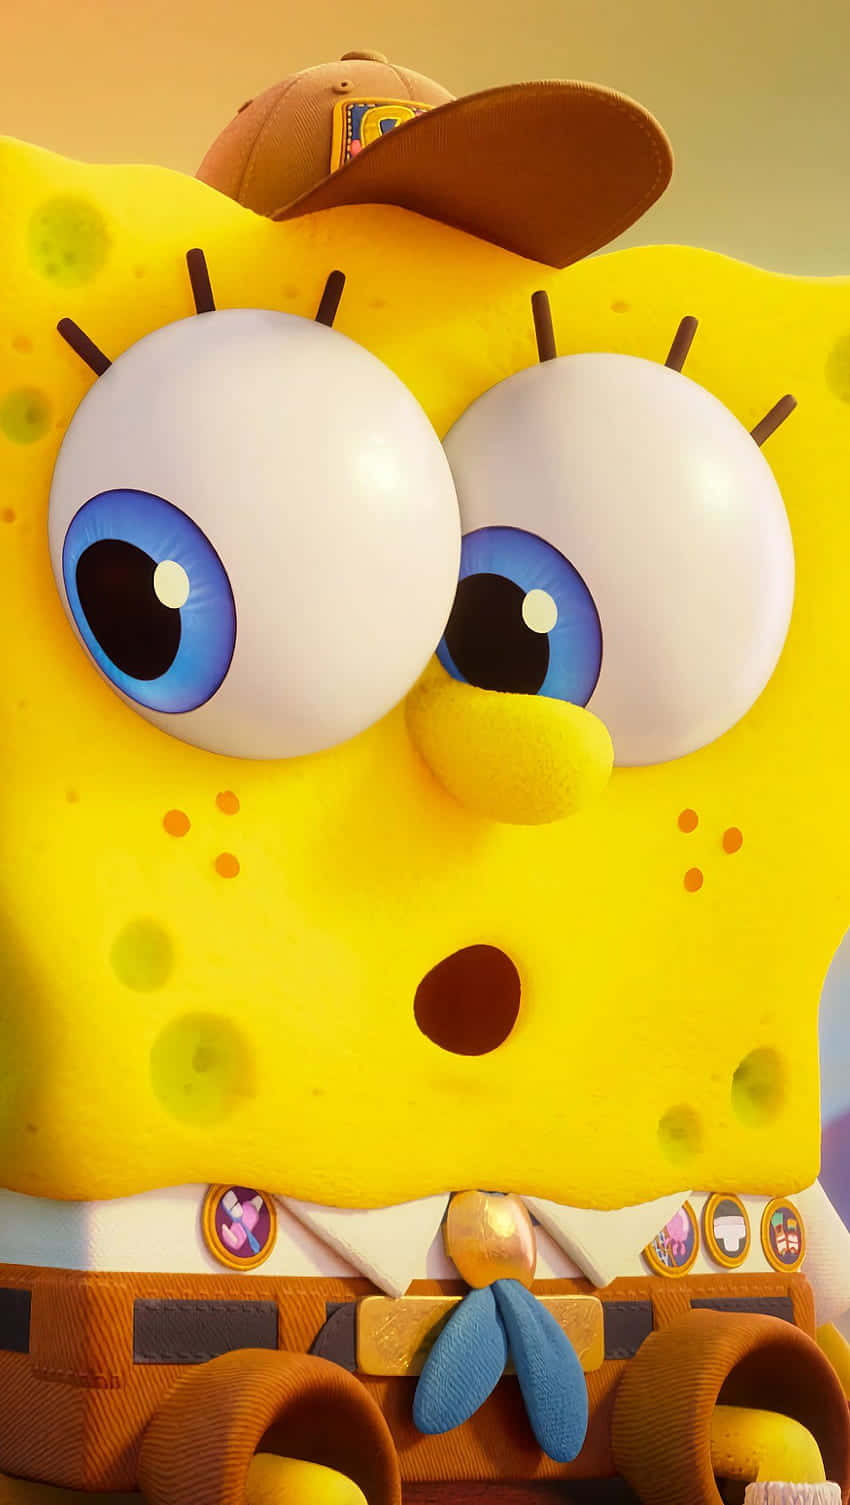 Sponge Bob Square Pants Movie Character Closeup Wallpaper